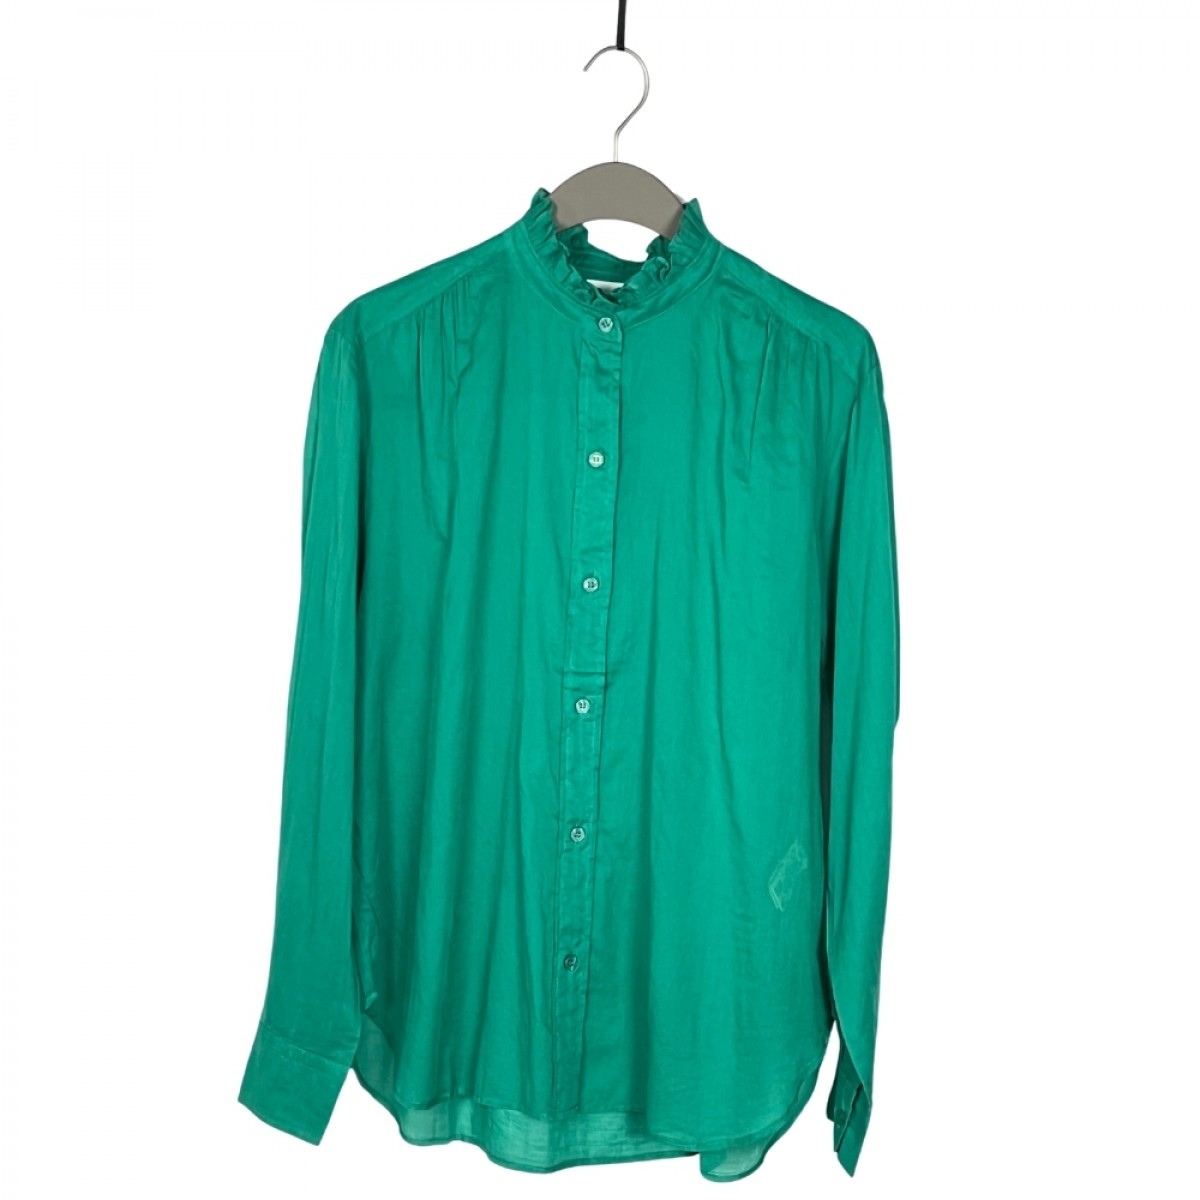 gamble shirt - emerald